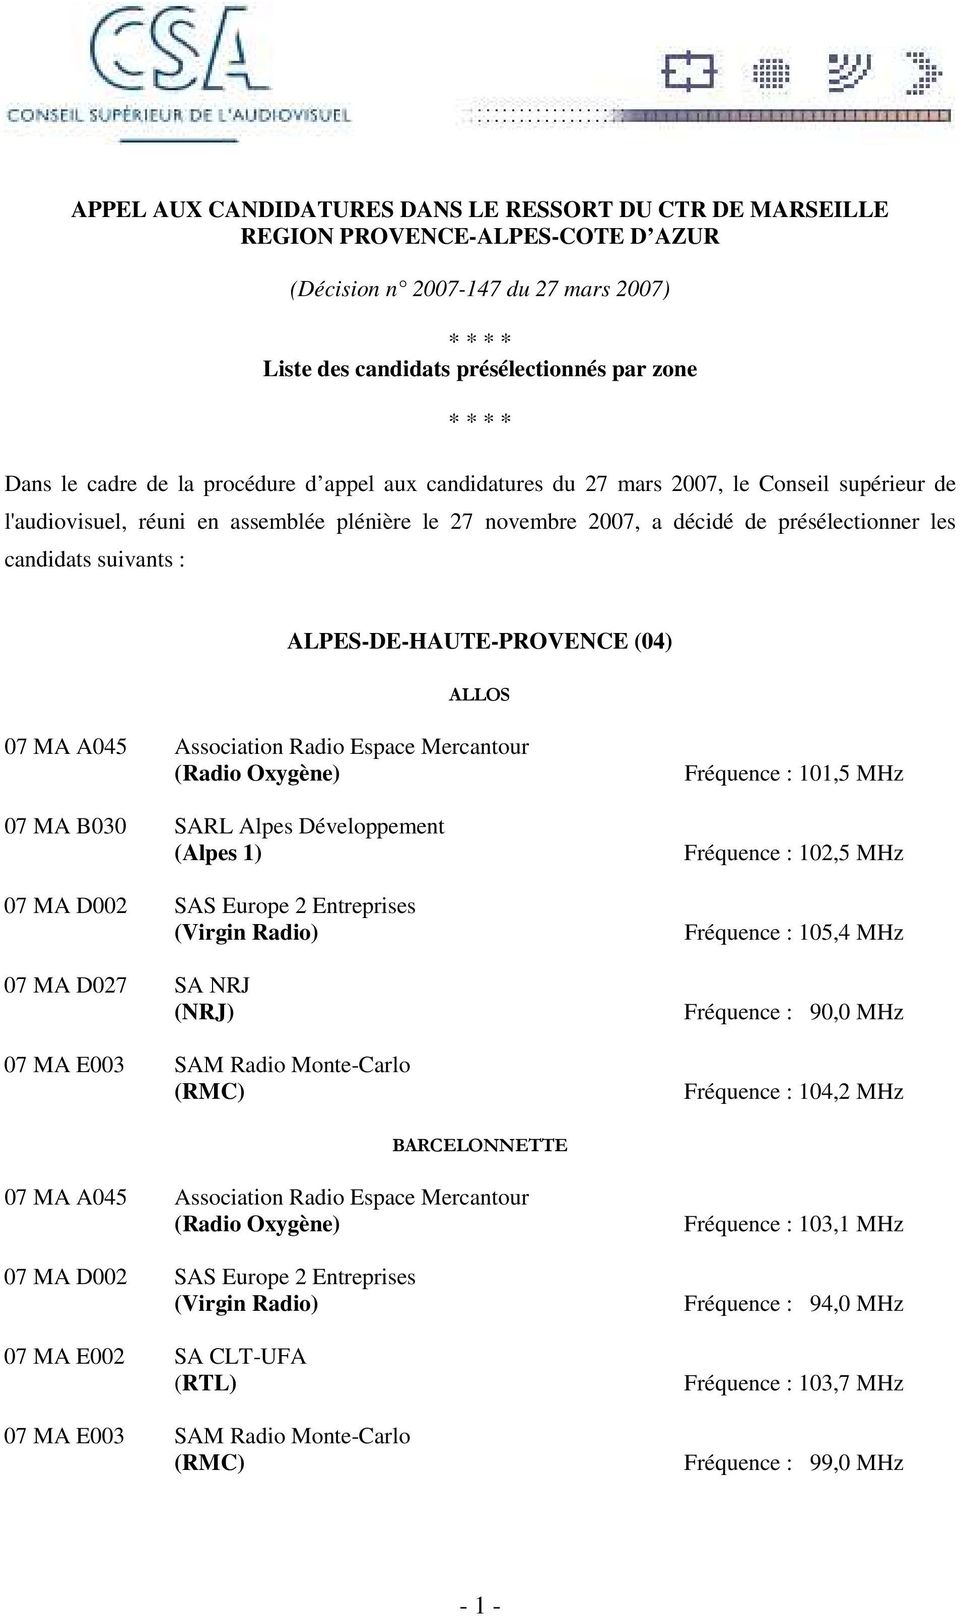 suivants : ALPES-DE-HAUTE-PROVENCE (04) ALLOS 07 MA A045 Association Radio Espace Mercantour (Radio Oxygène) 07 MA B030 SARL Alpes Développement (Alpes 1) 07 MA D002 SAS Europe 2 Entreprises 07 MA